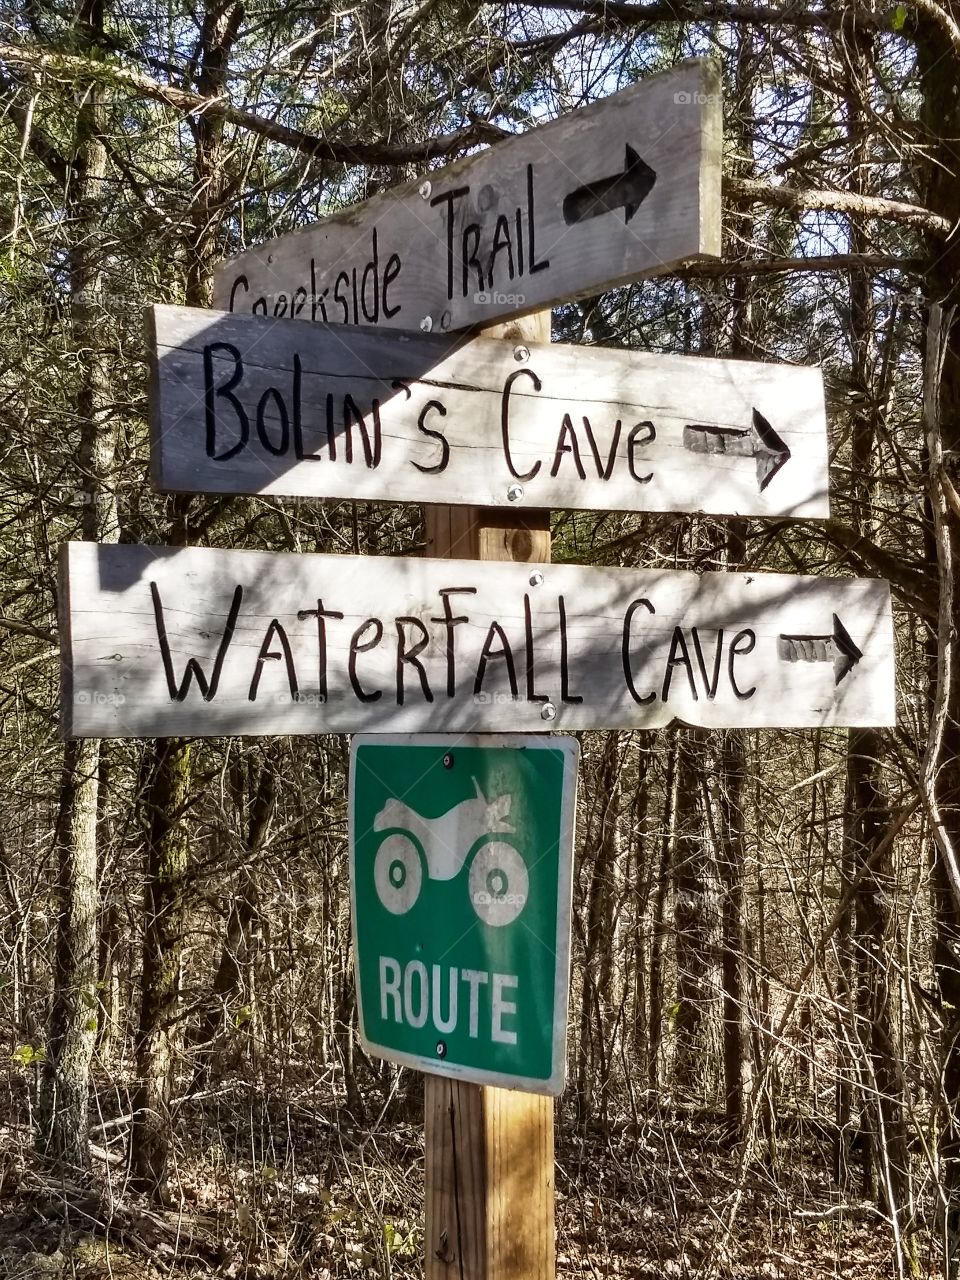 Bolin's cave, waterfall cave, Creekside. trail.
Branson Missouri hiking trails.